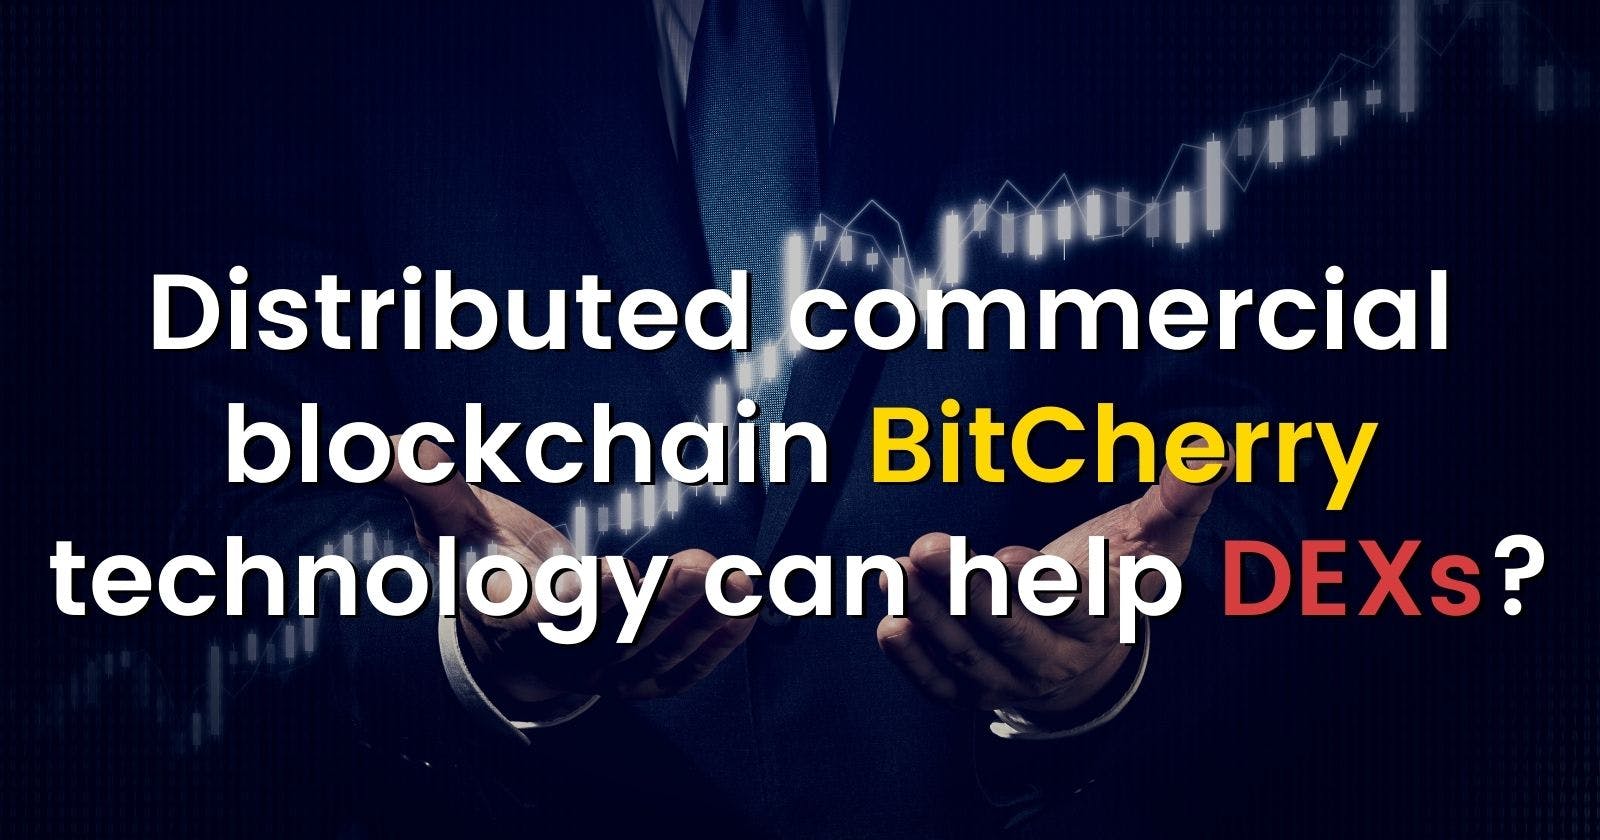 Distributed commercial blockchain BitCherry technology can help DEXs?